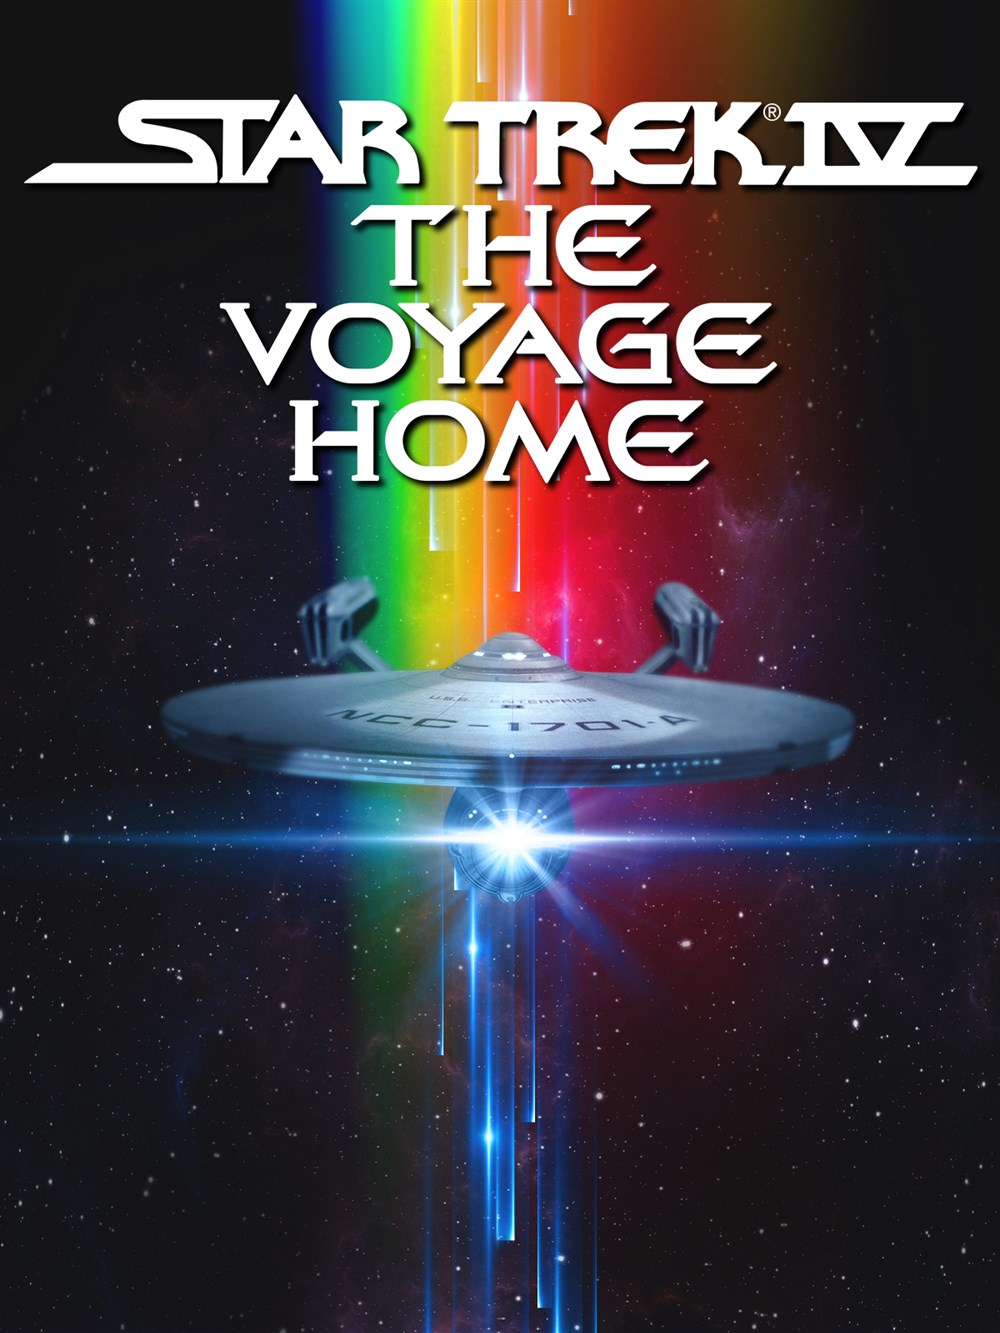 star trek iv the voyage home movie